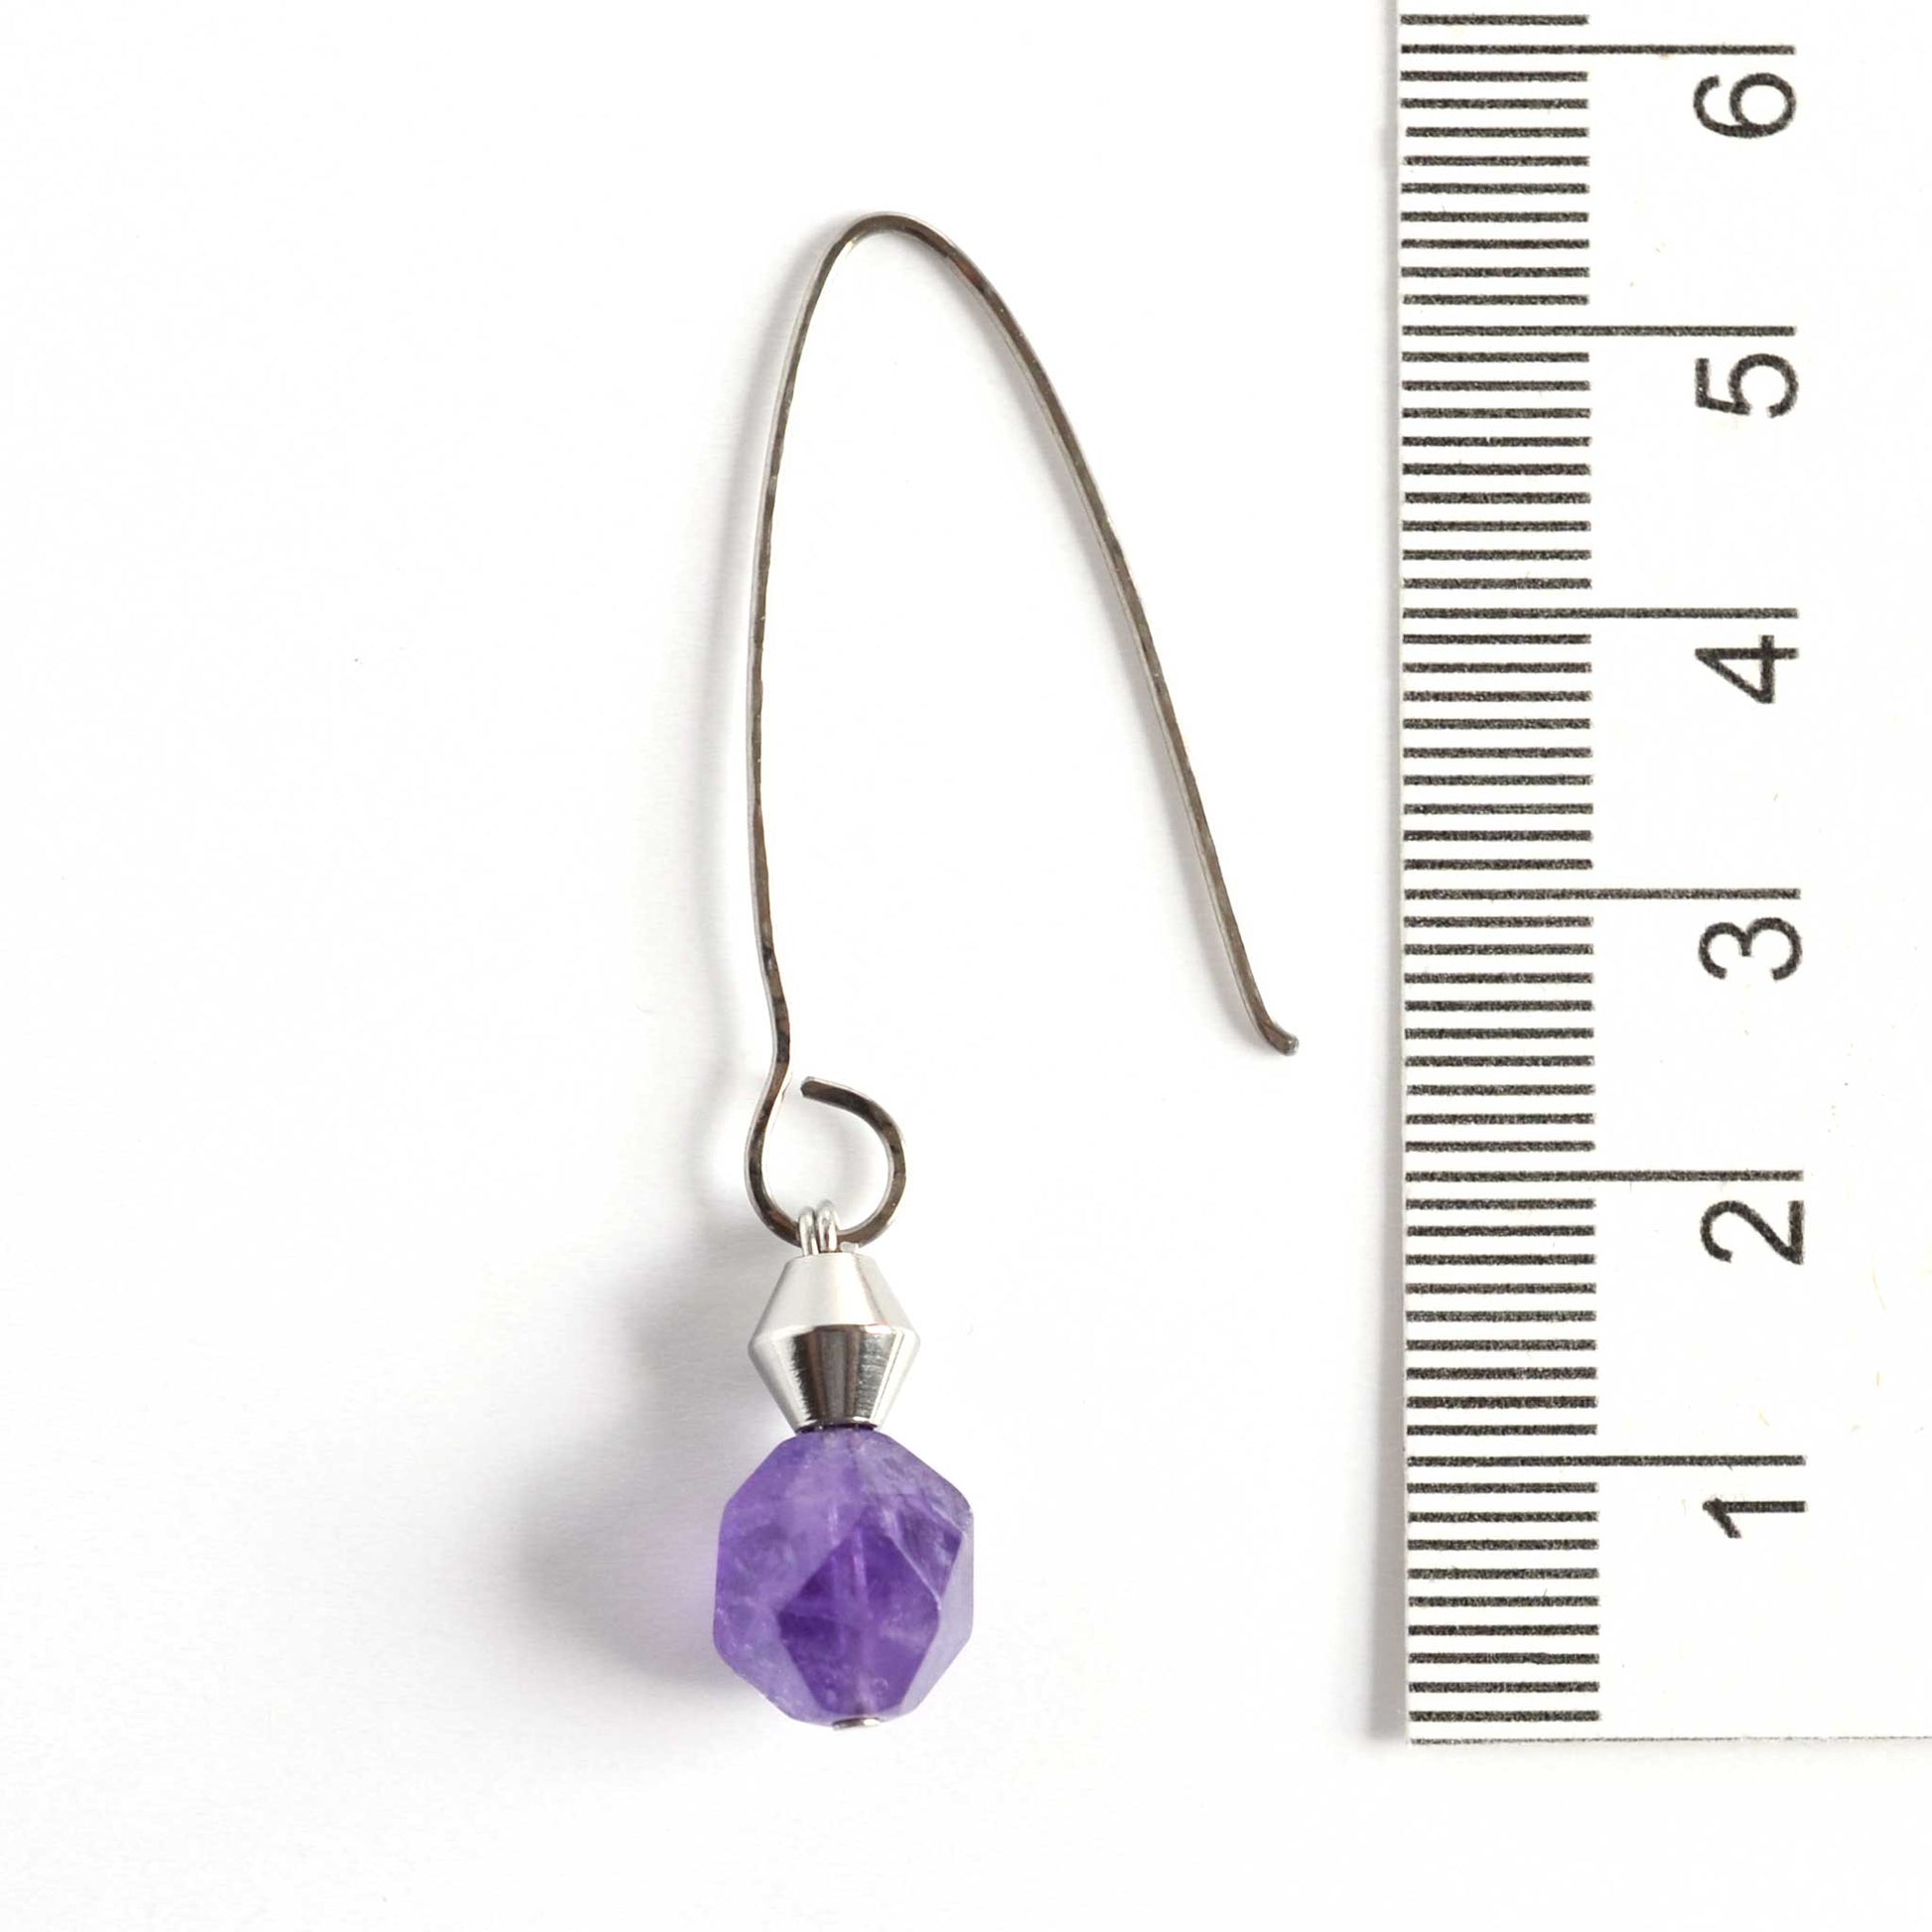 52mm long Amethyst drop earrings next to ruler.